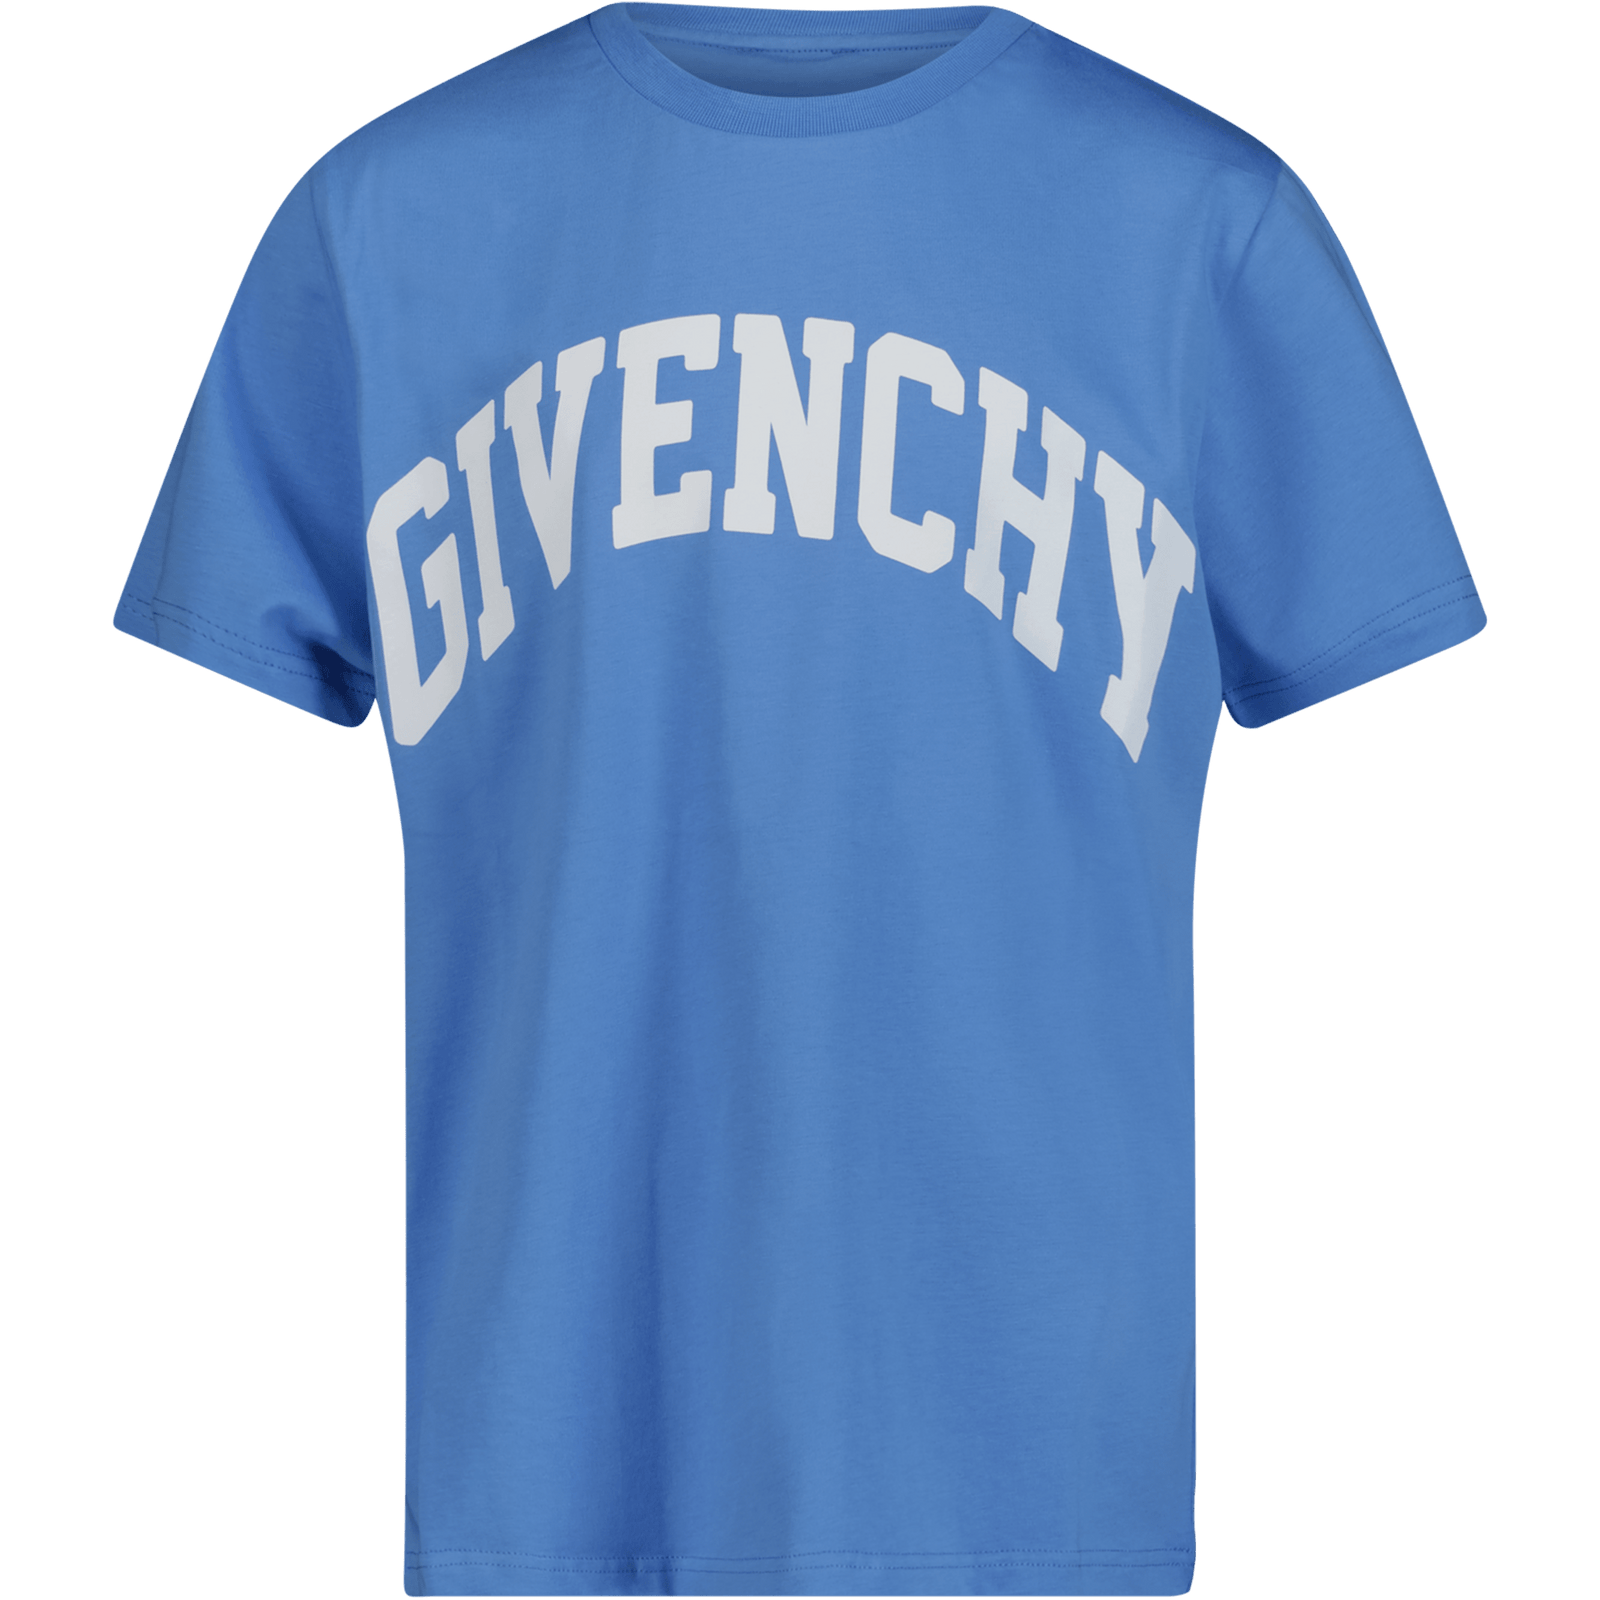 Givenchy Kinder Jongens T-Shirt Blauw 4Y